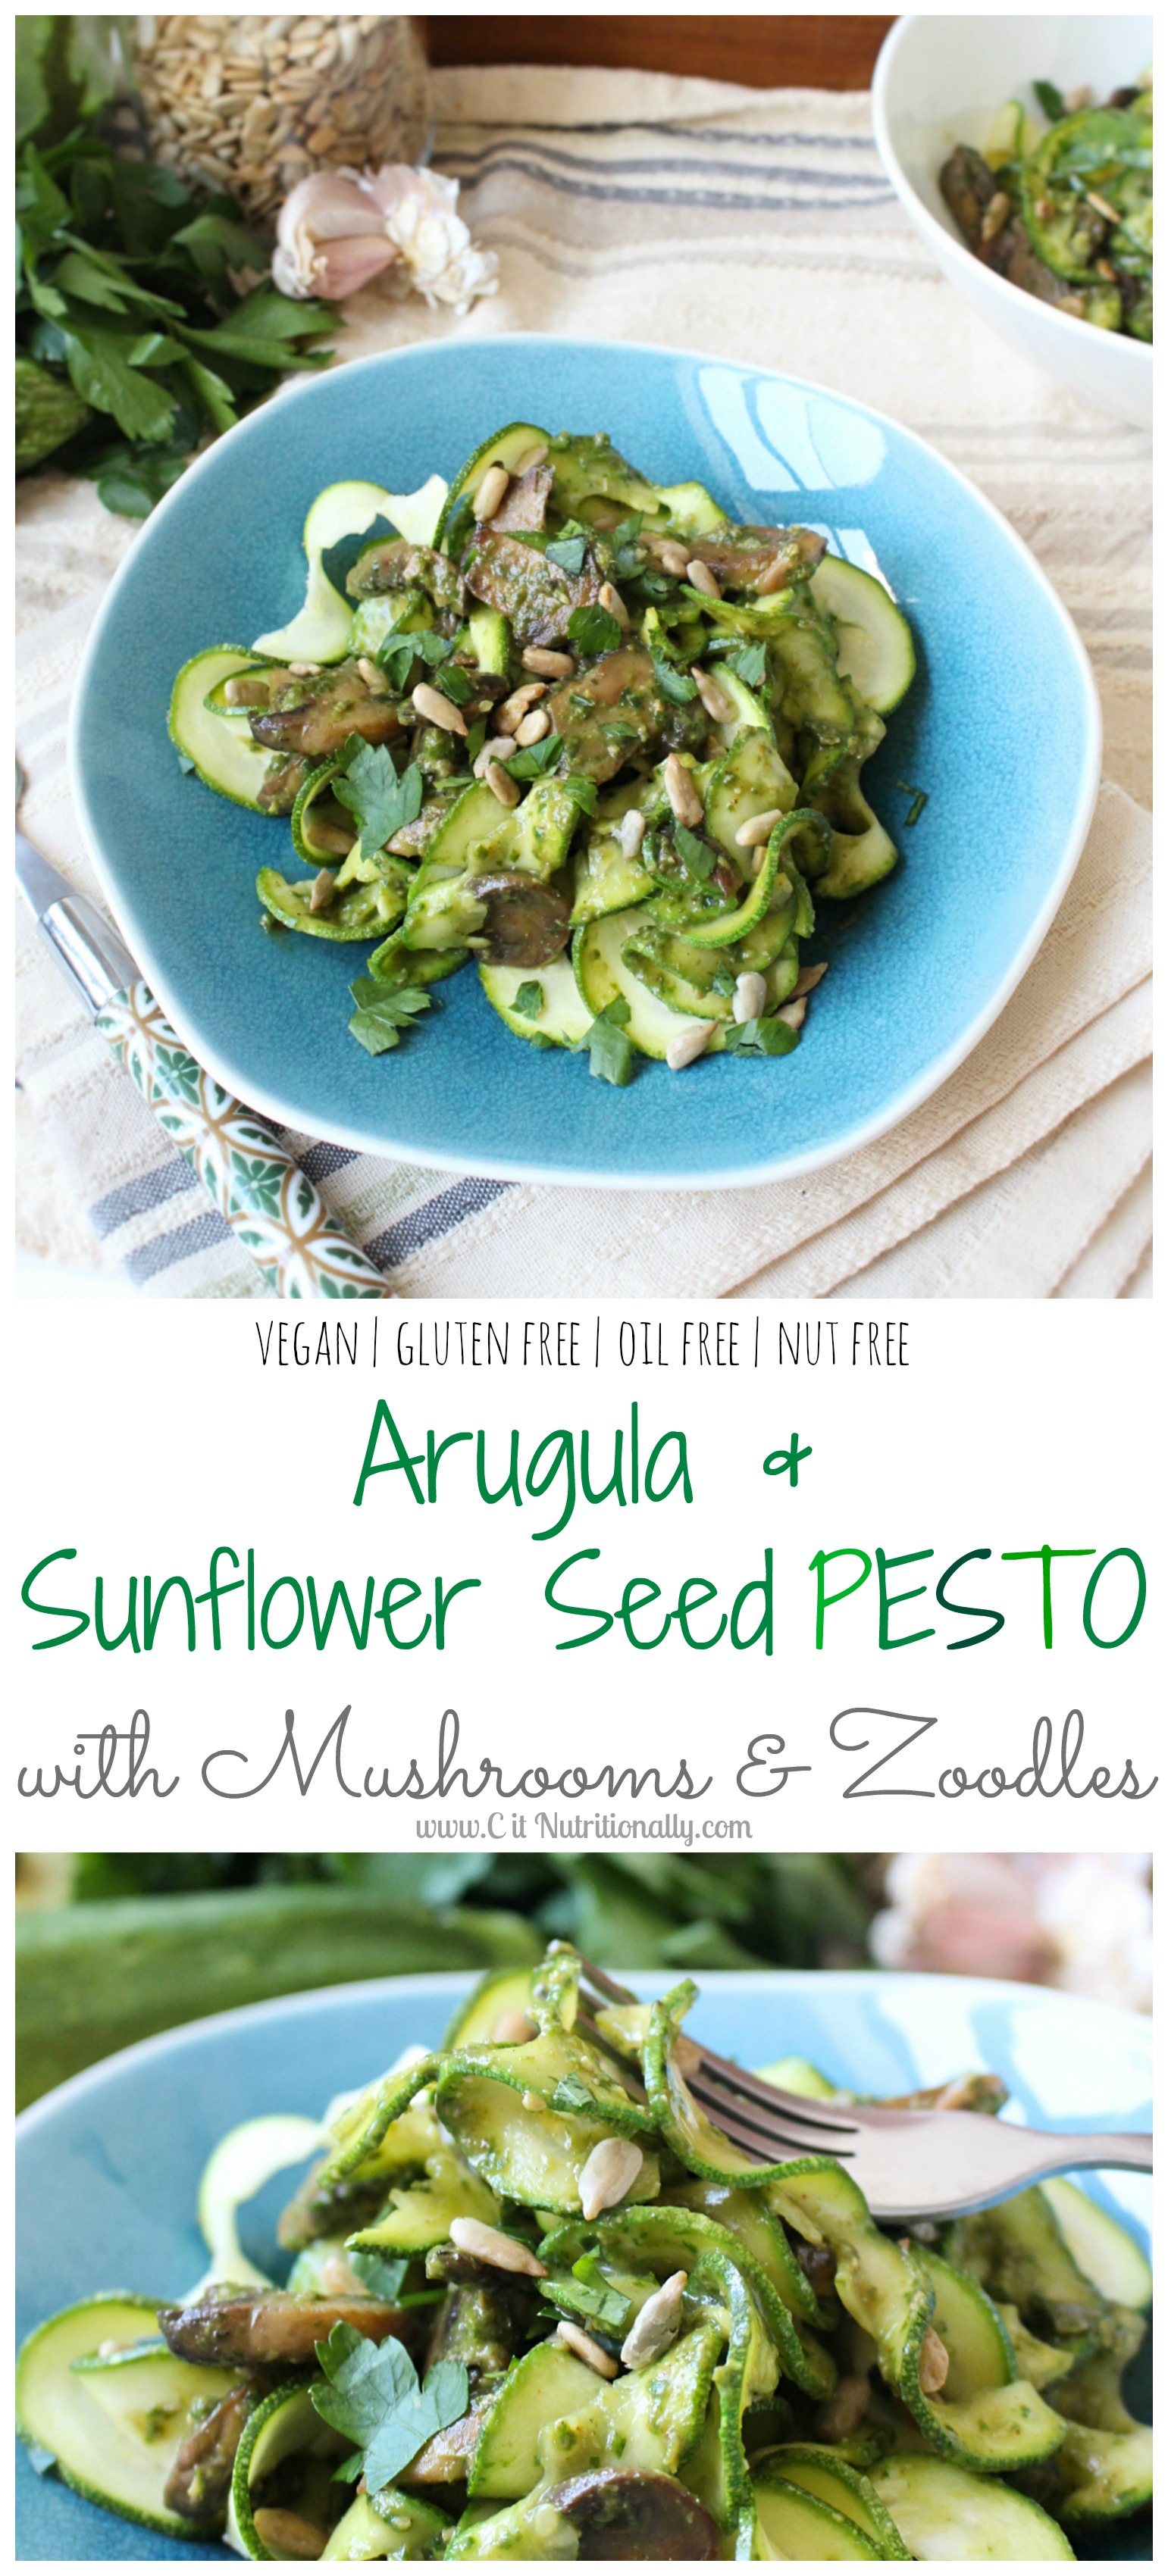 Arugula and Sunflower Seed Pesto with Mushrooms and Zoodles | C it Nutritionally #vegan #glutenfree #grainfree #oilfree #nutfree